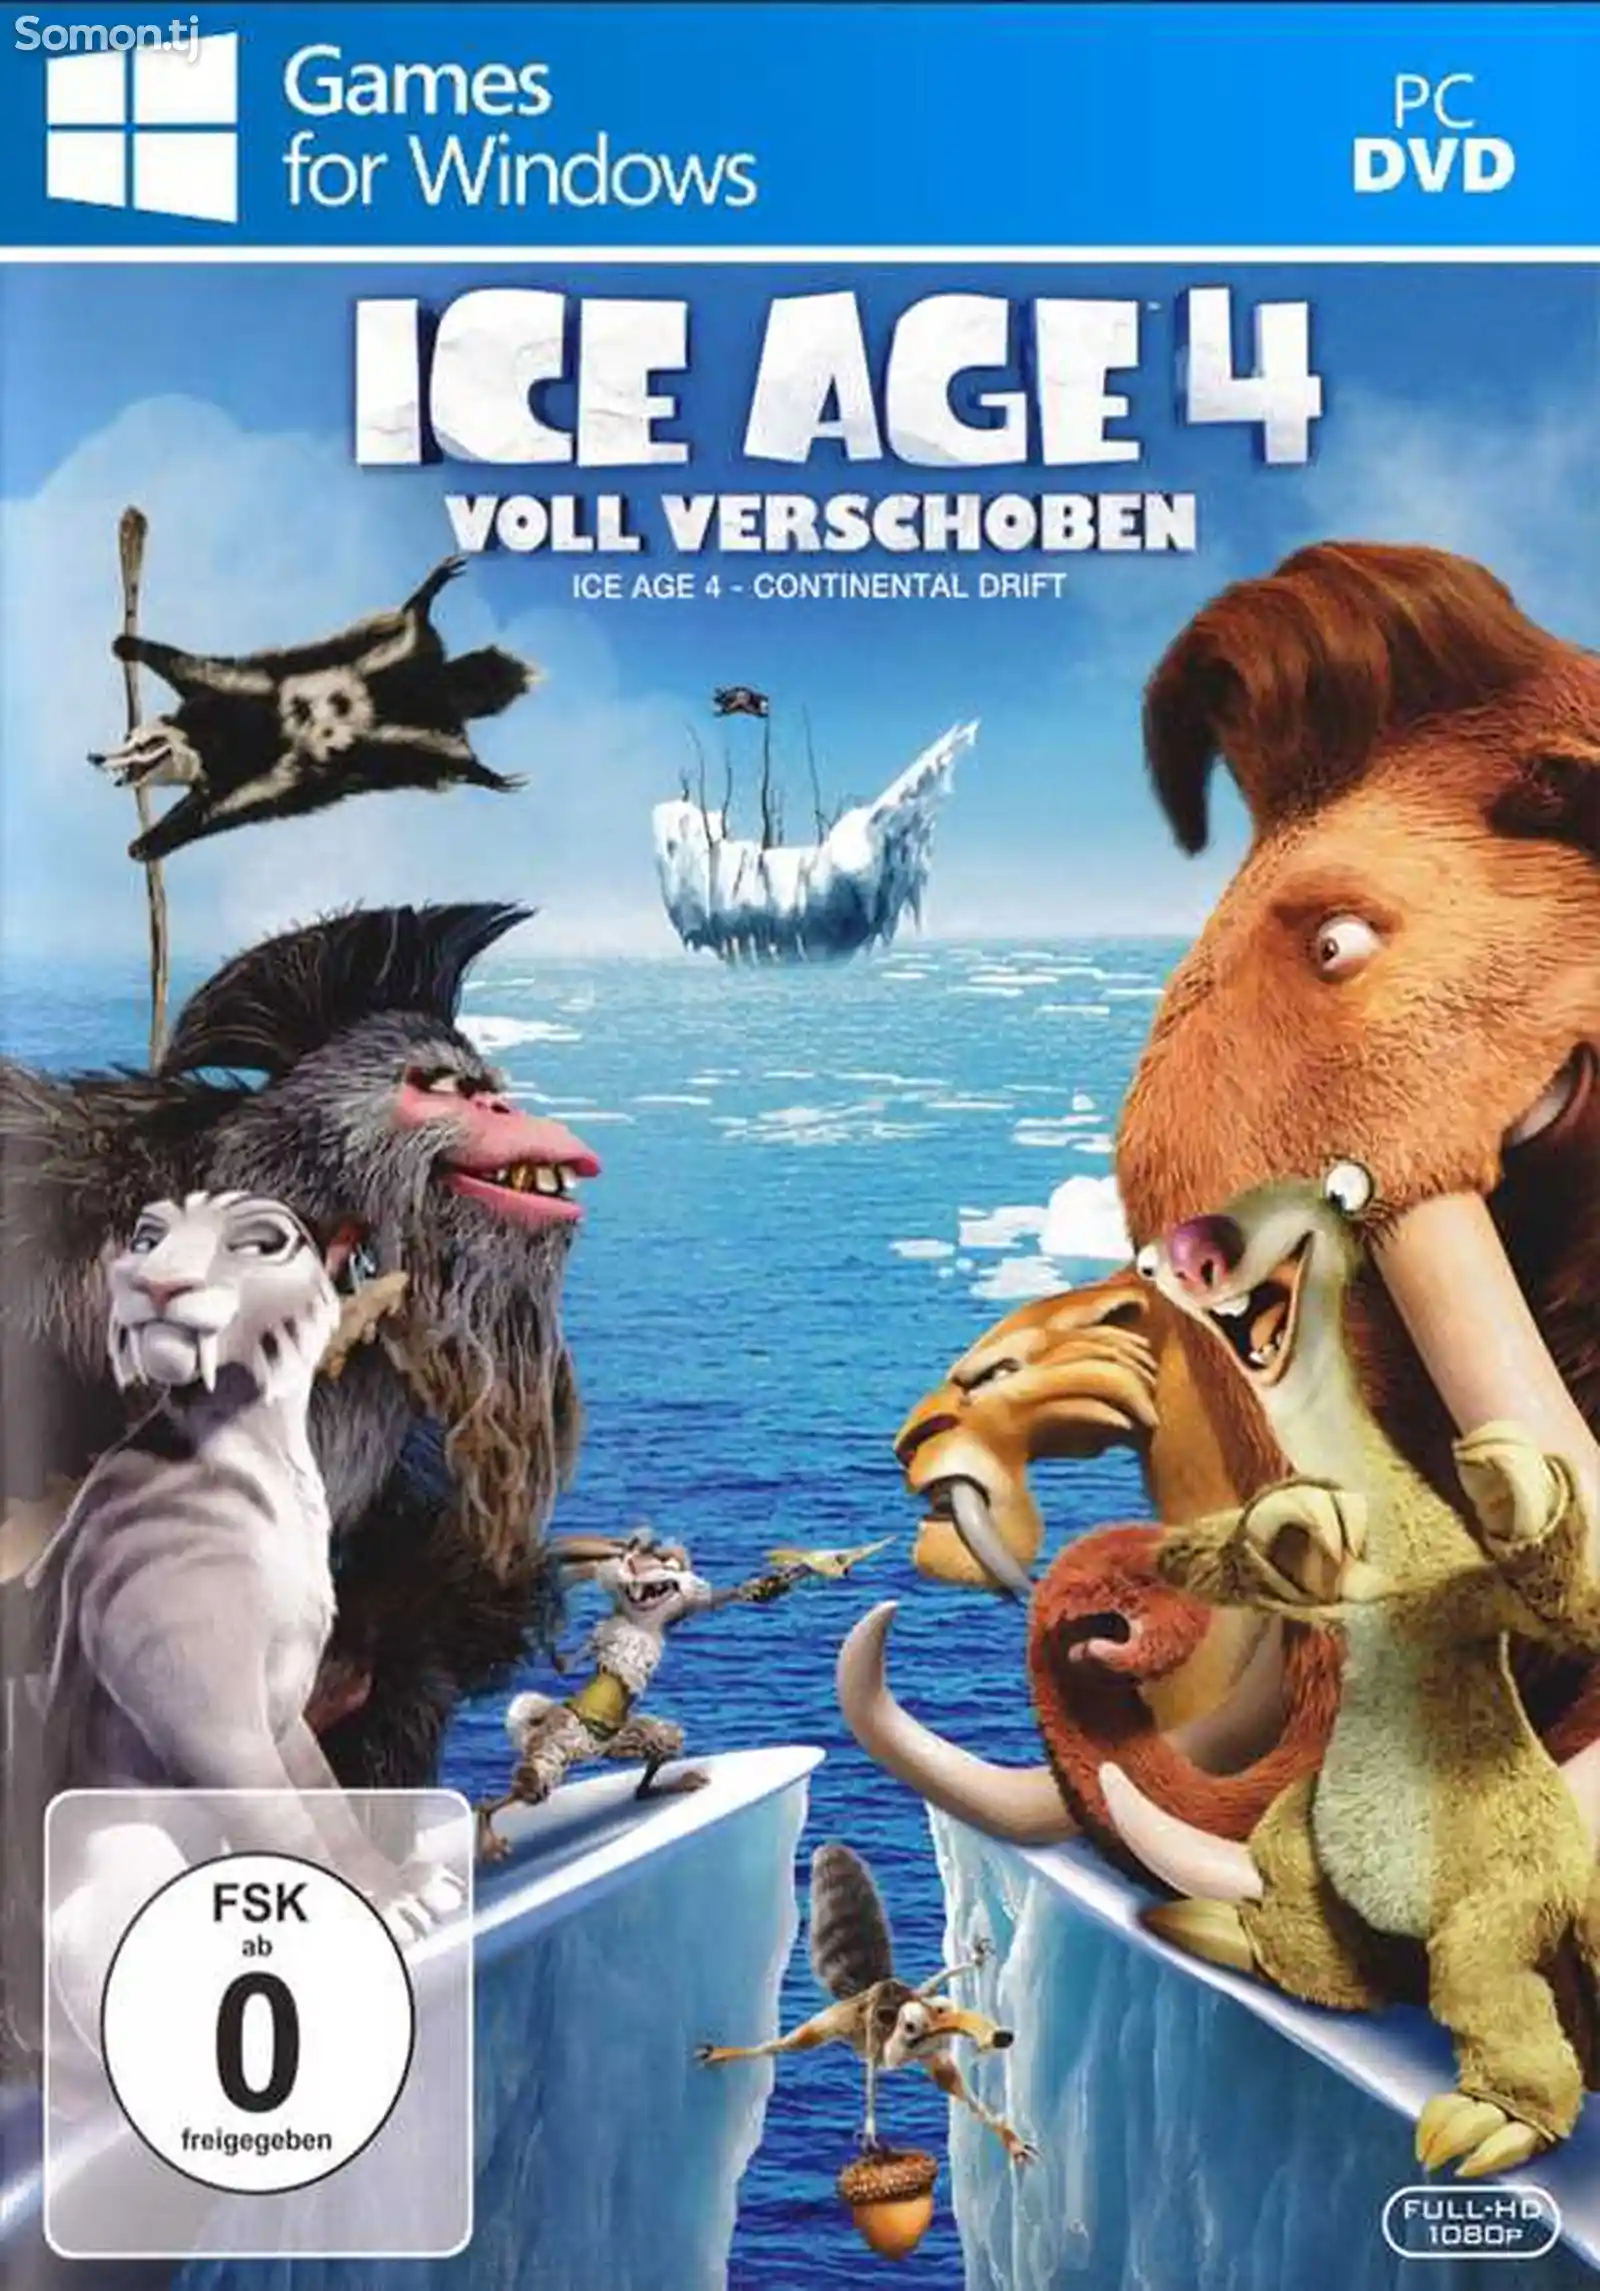 Игра Ice age 4 для компьютера-пк-pc-1